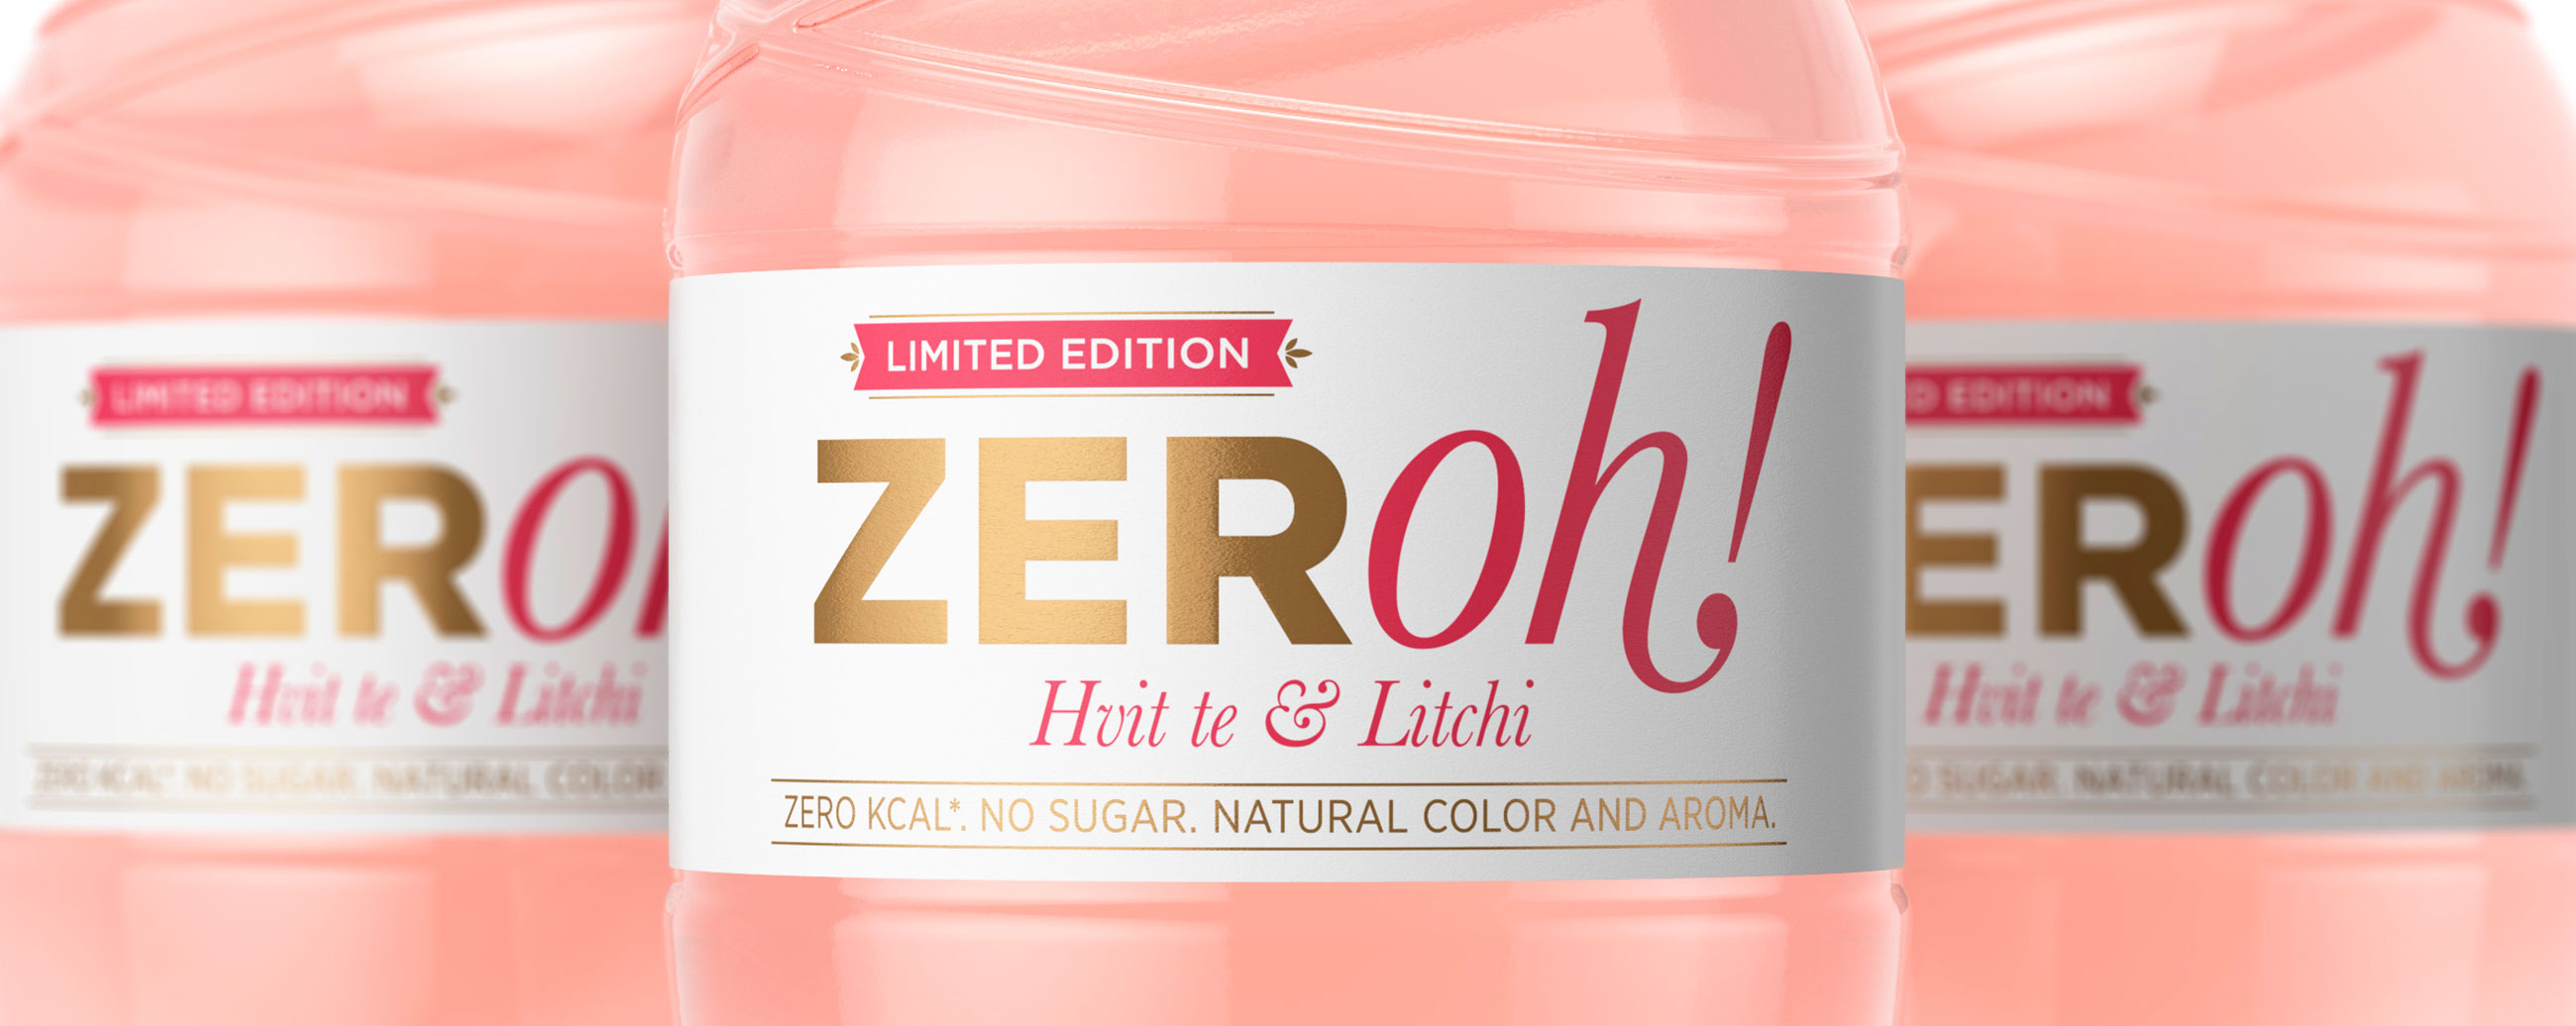 Lerum Zeroh saft cordial Hvit te & litchi, white tea, limited edition. Emballasje packaging design.